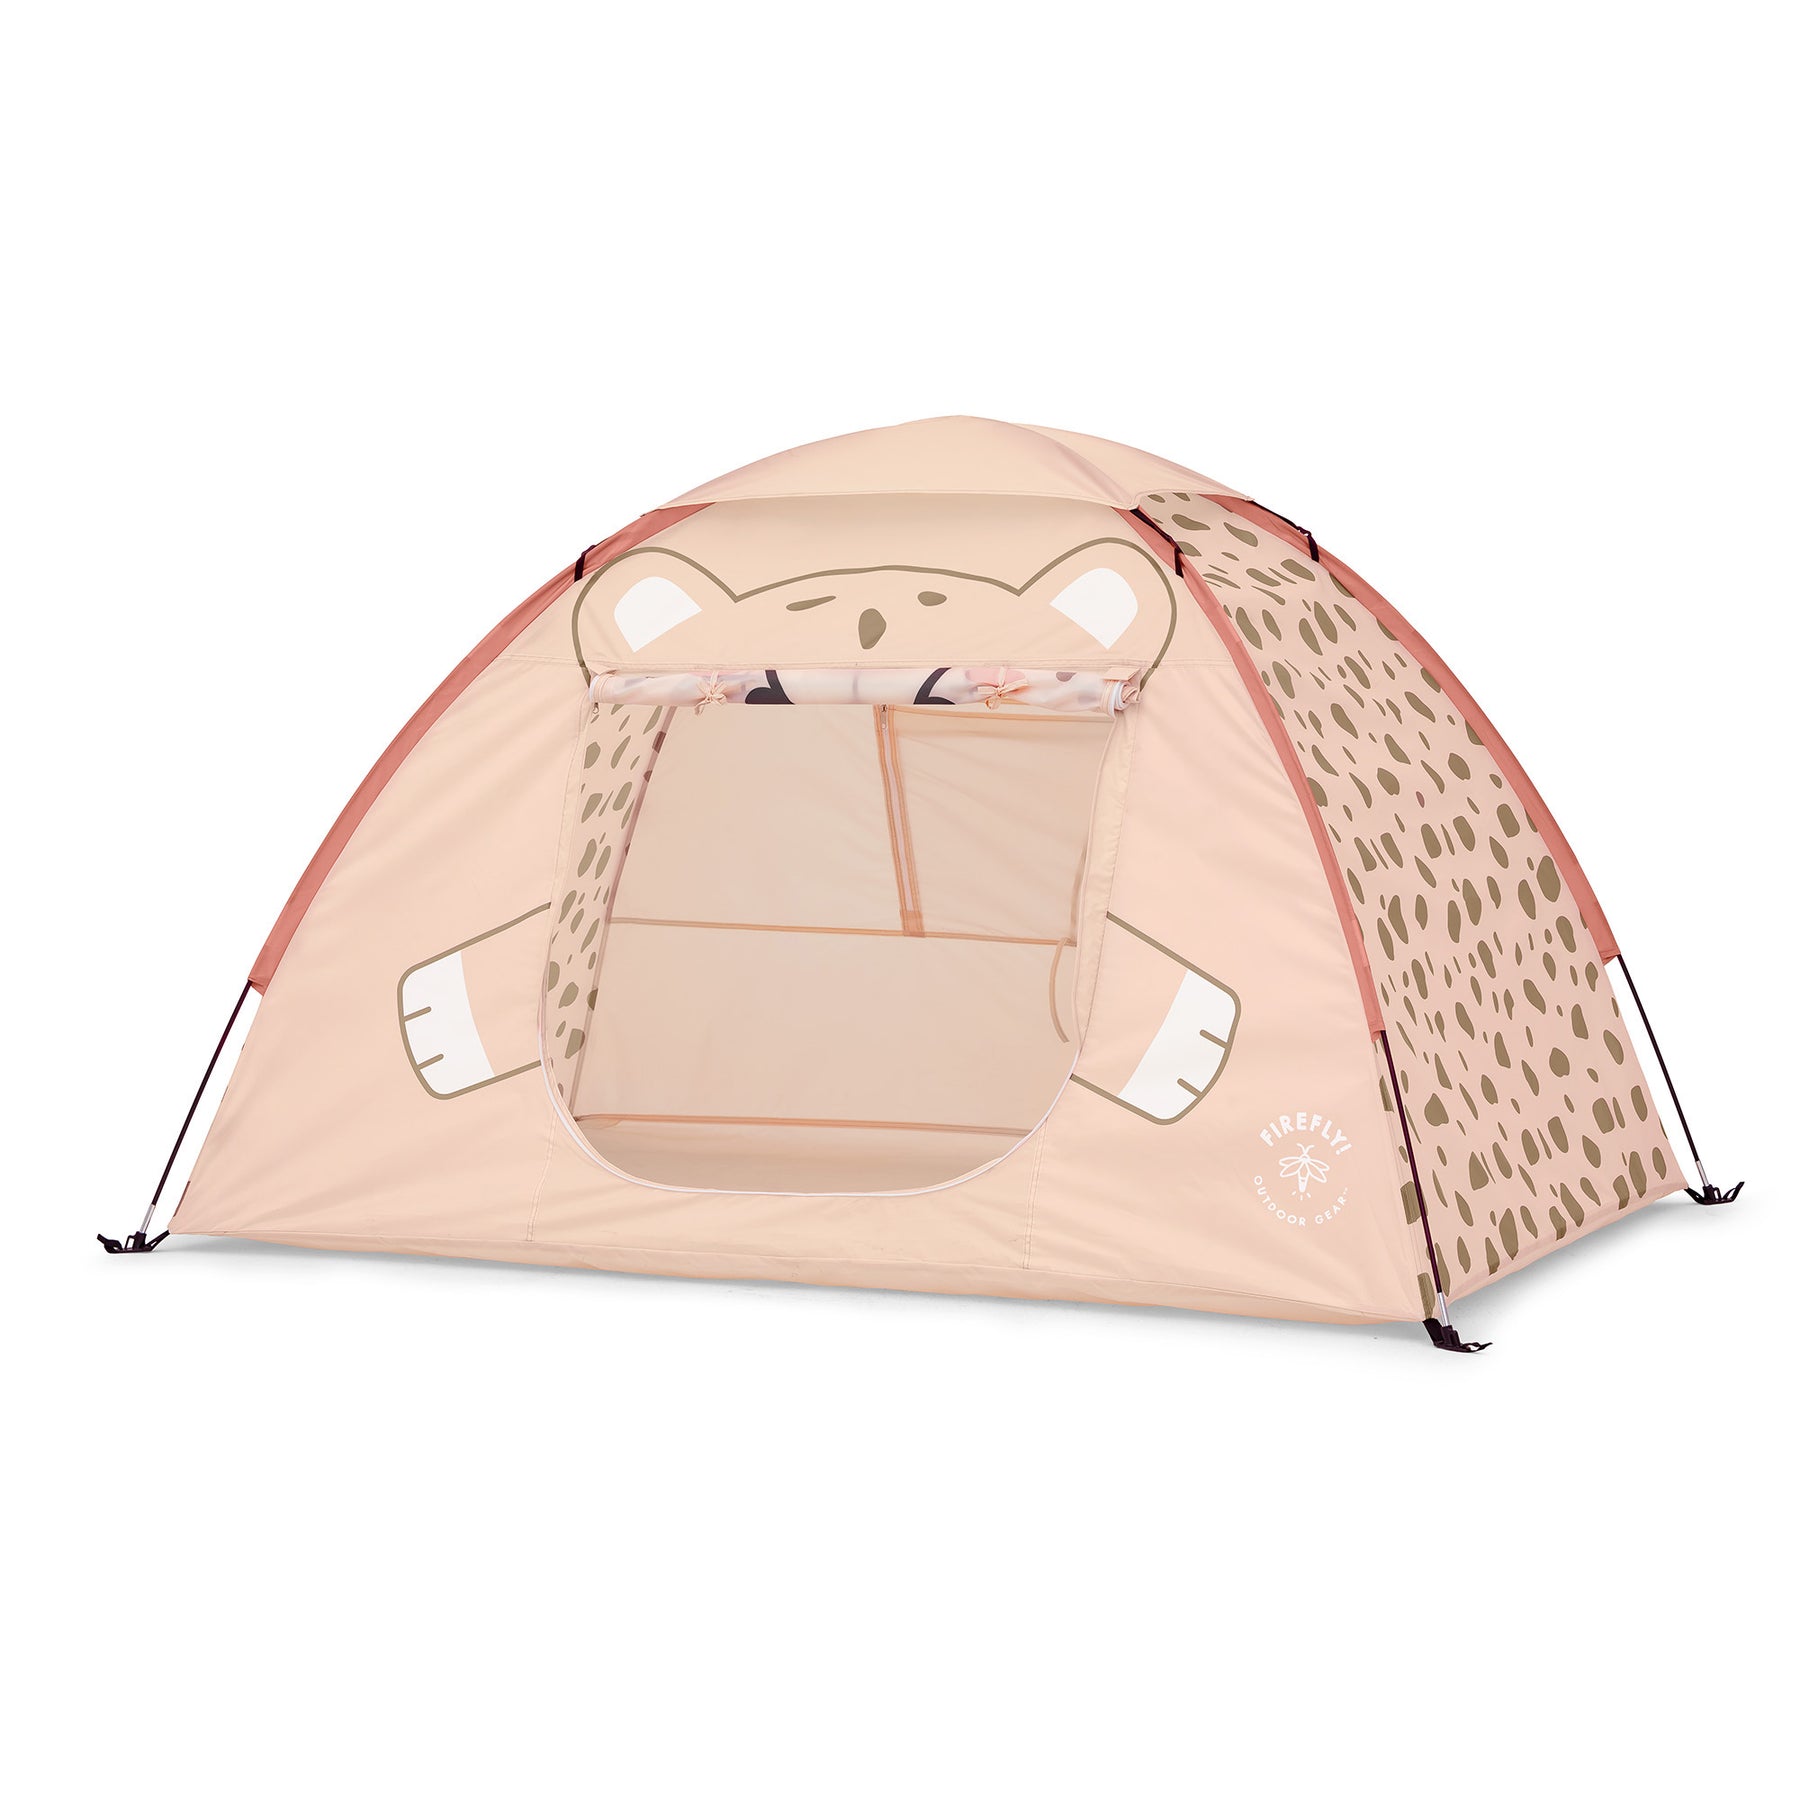 Cha Cha the Cheetah Kids' Camping Tent